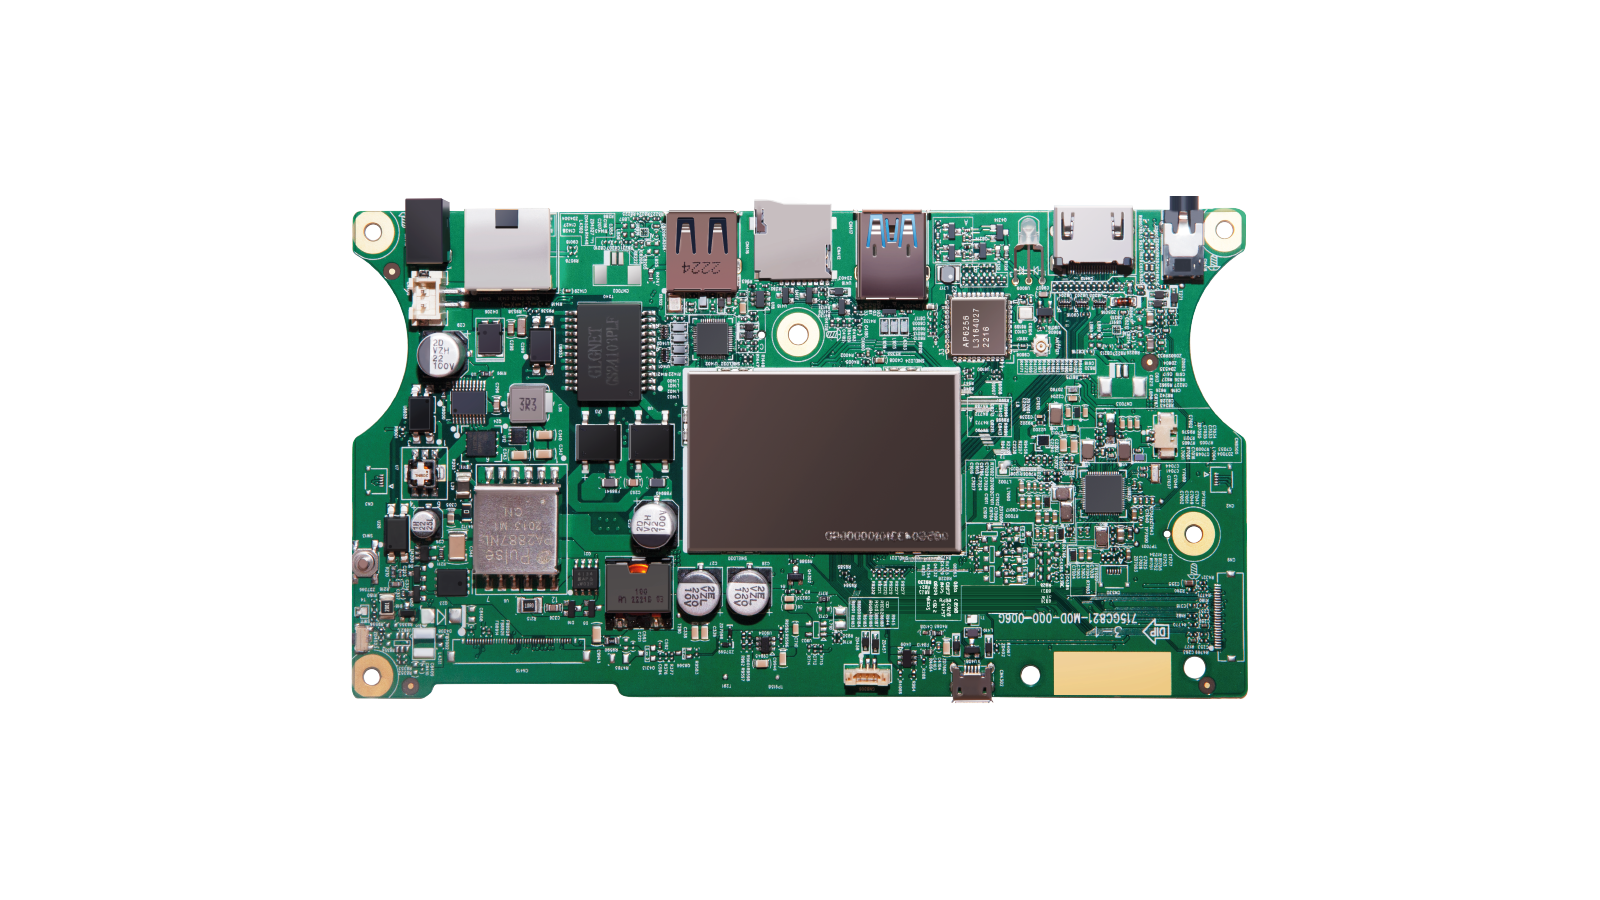 LV-Tron LVB-3566-5 embedded board using Rockchip RK-3566 chipset